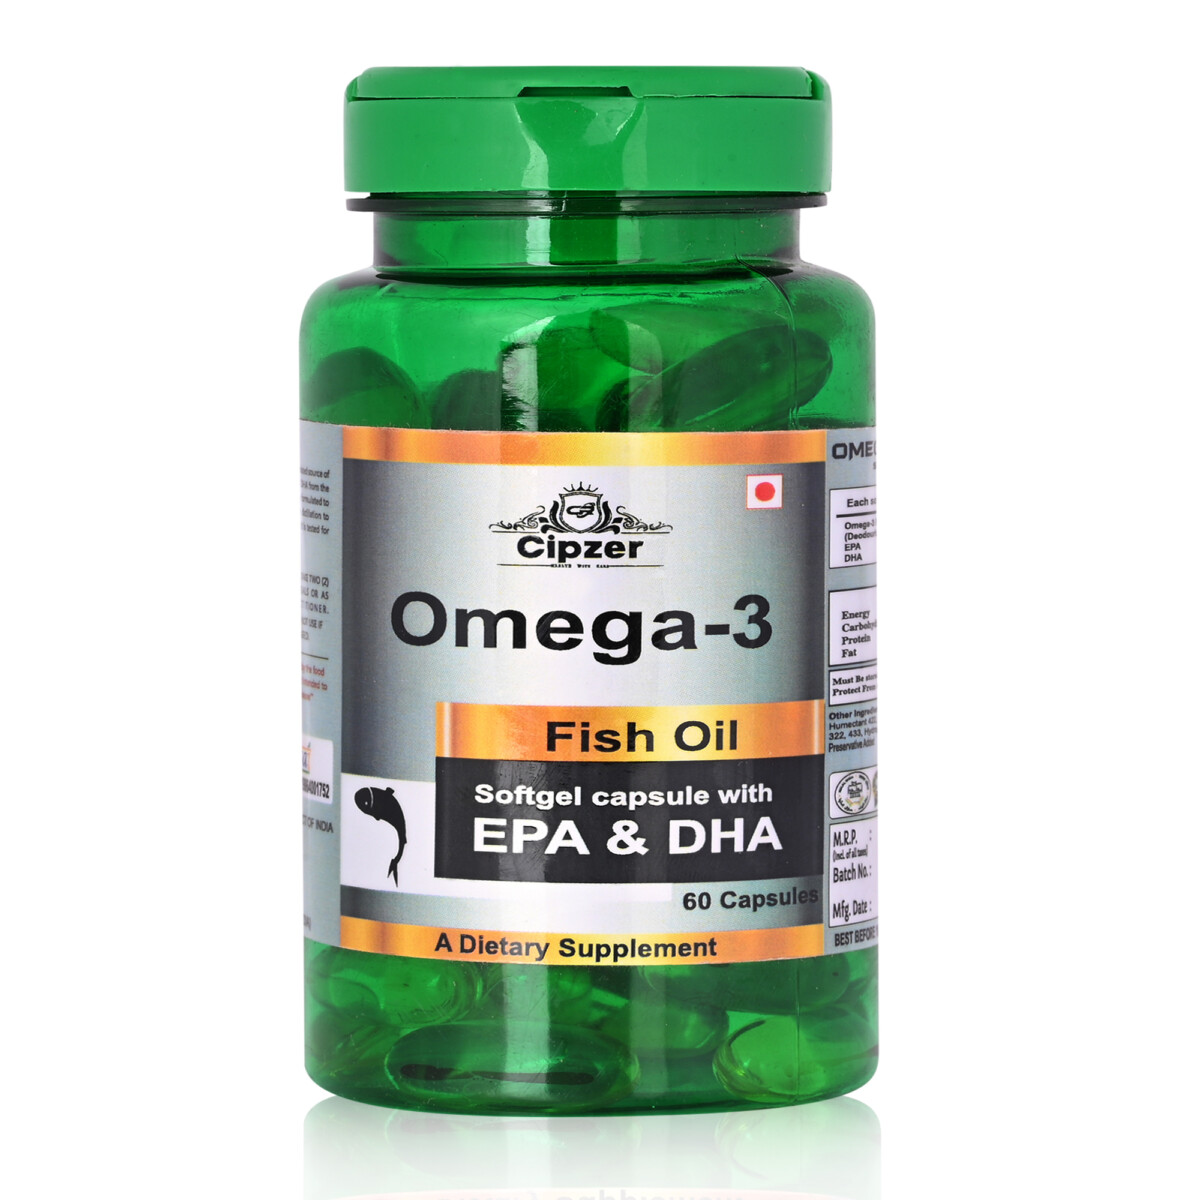 CIpzer omega-3 fish oil